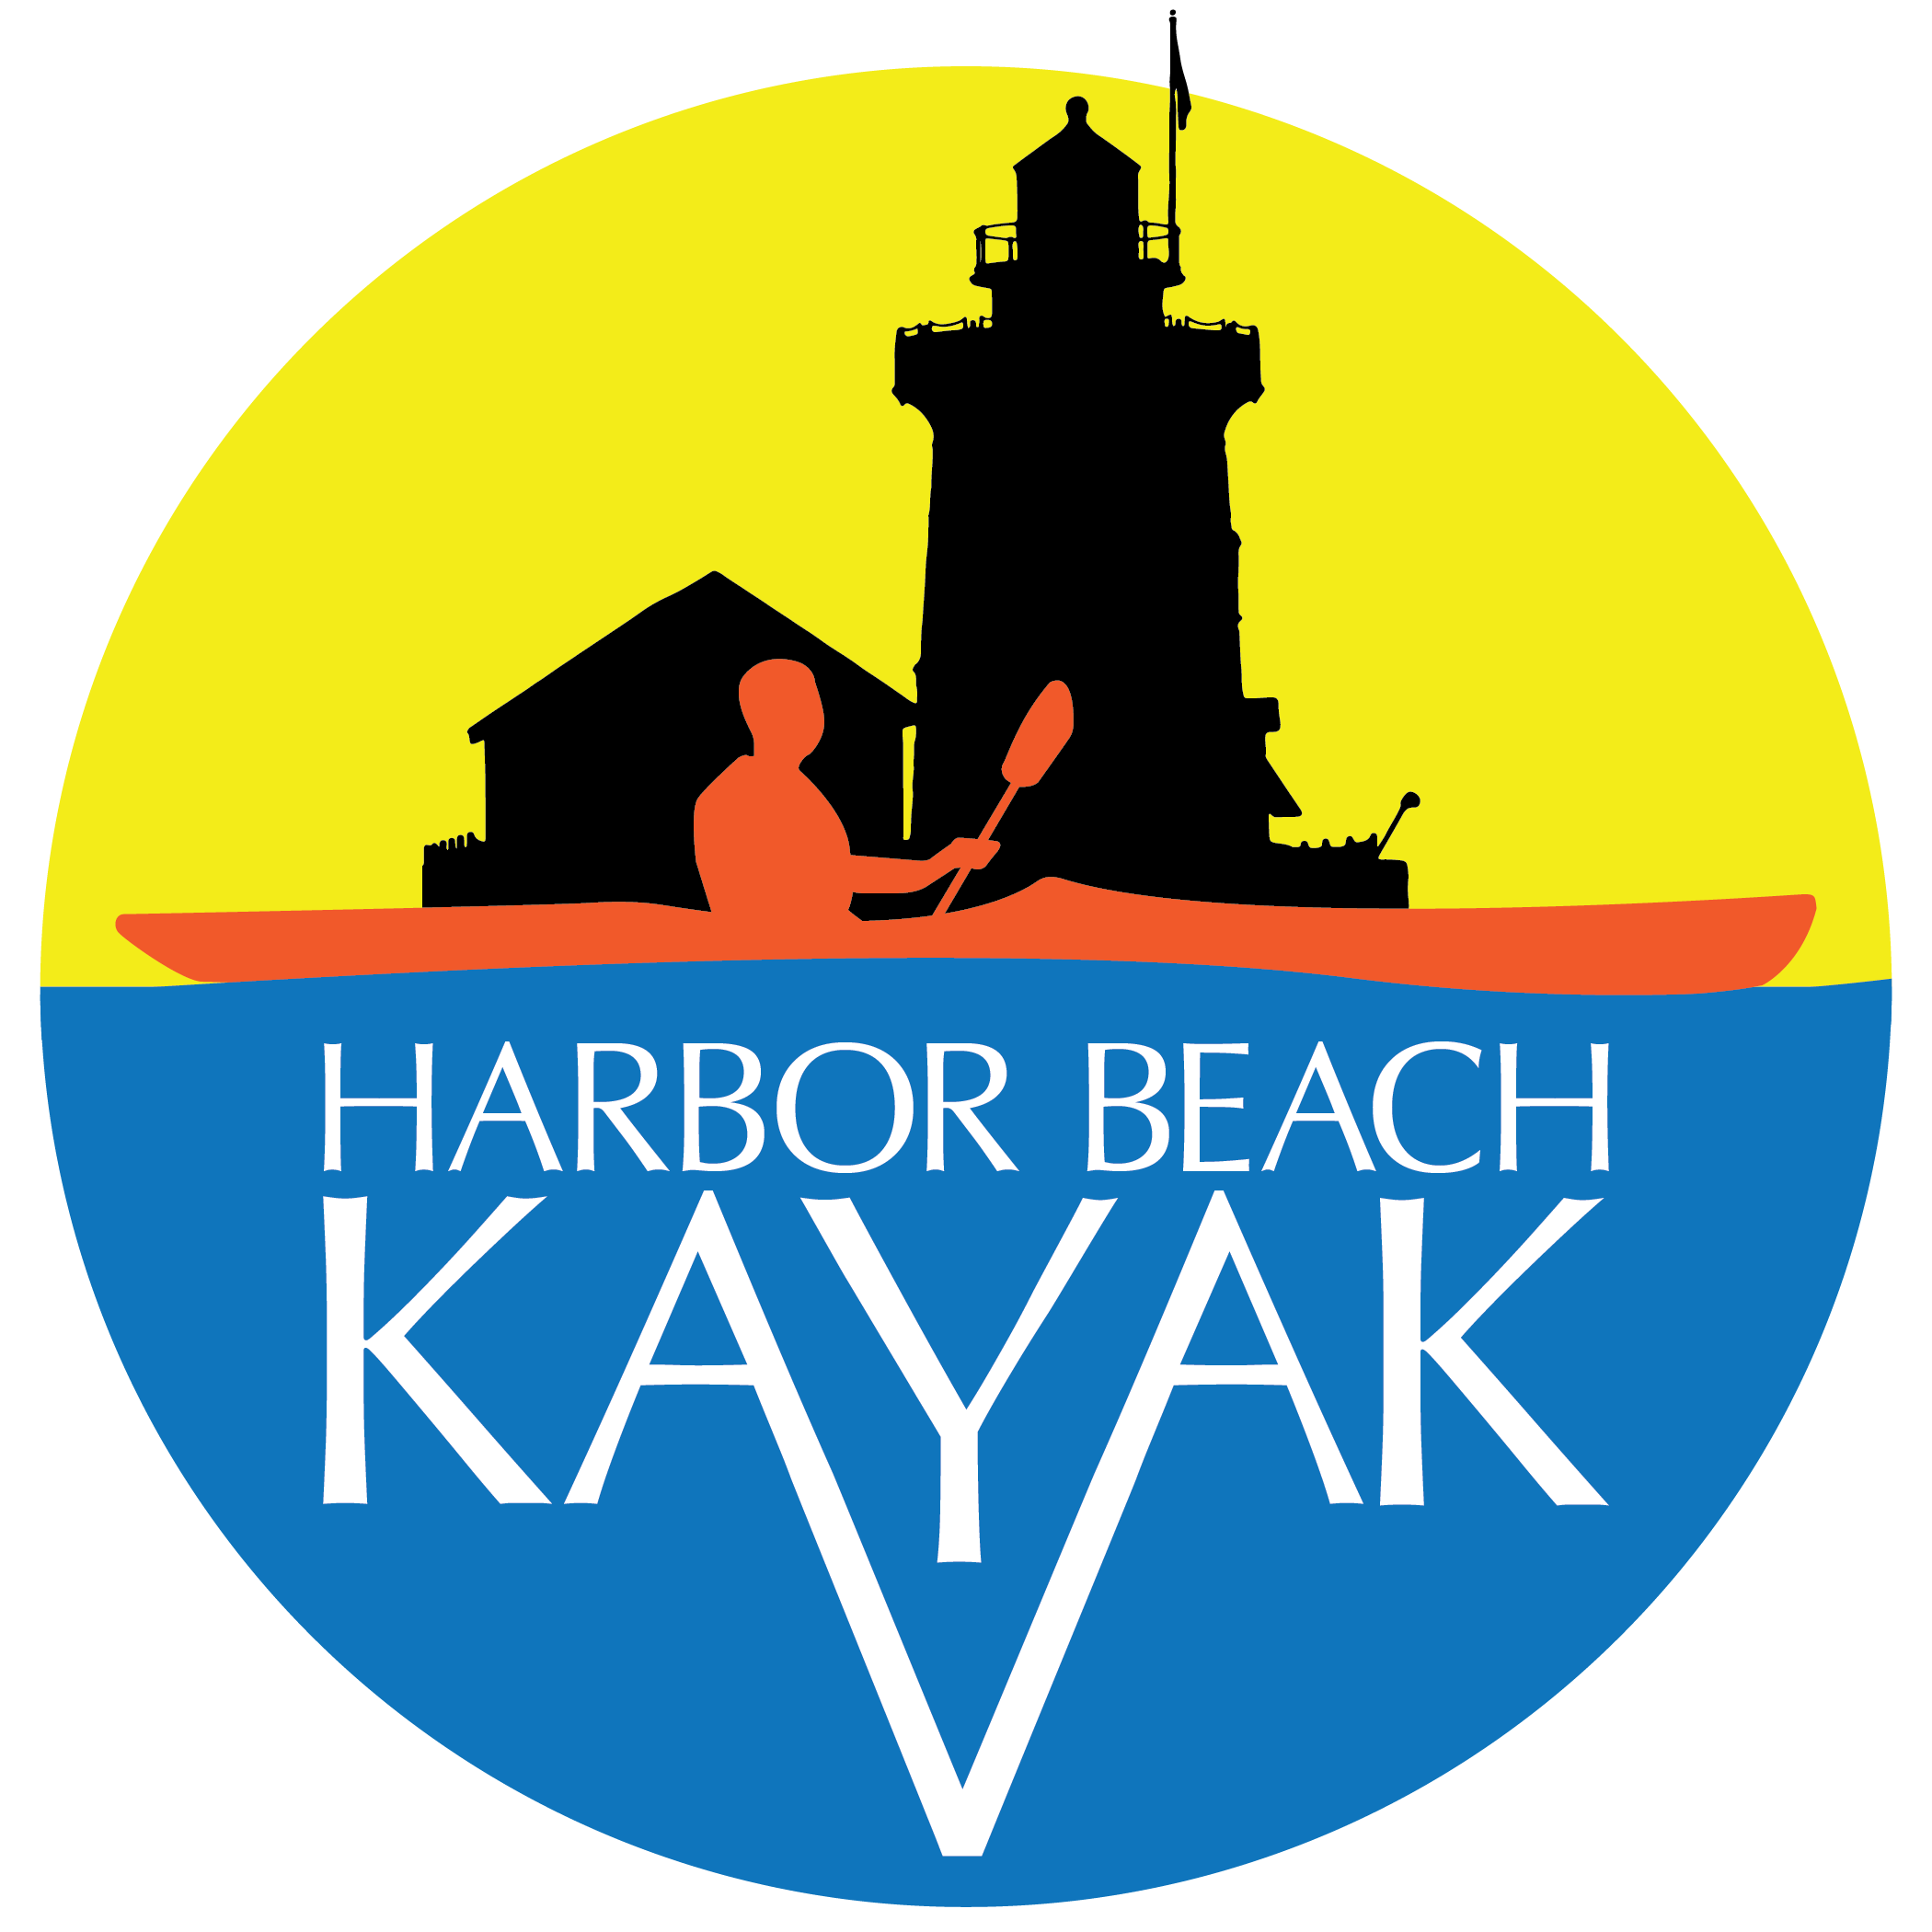 Harbor Beach Kayak (Copy) (Copy) (Copy)